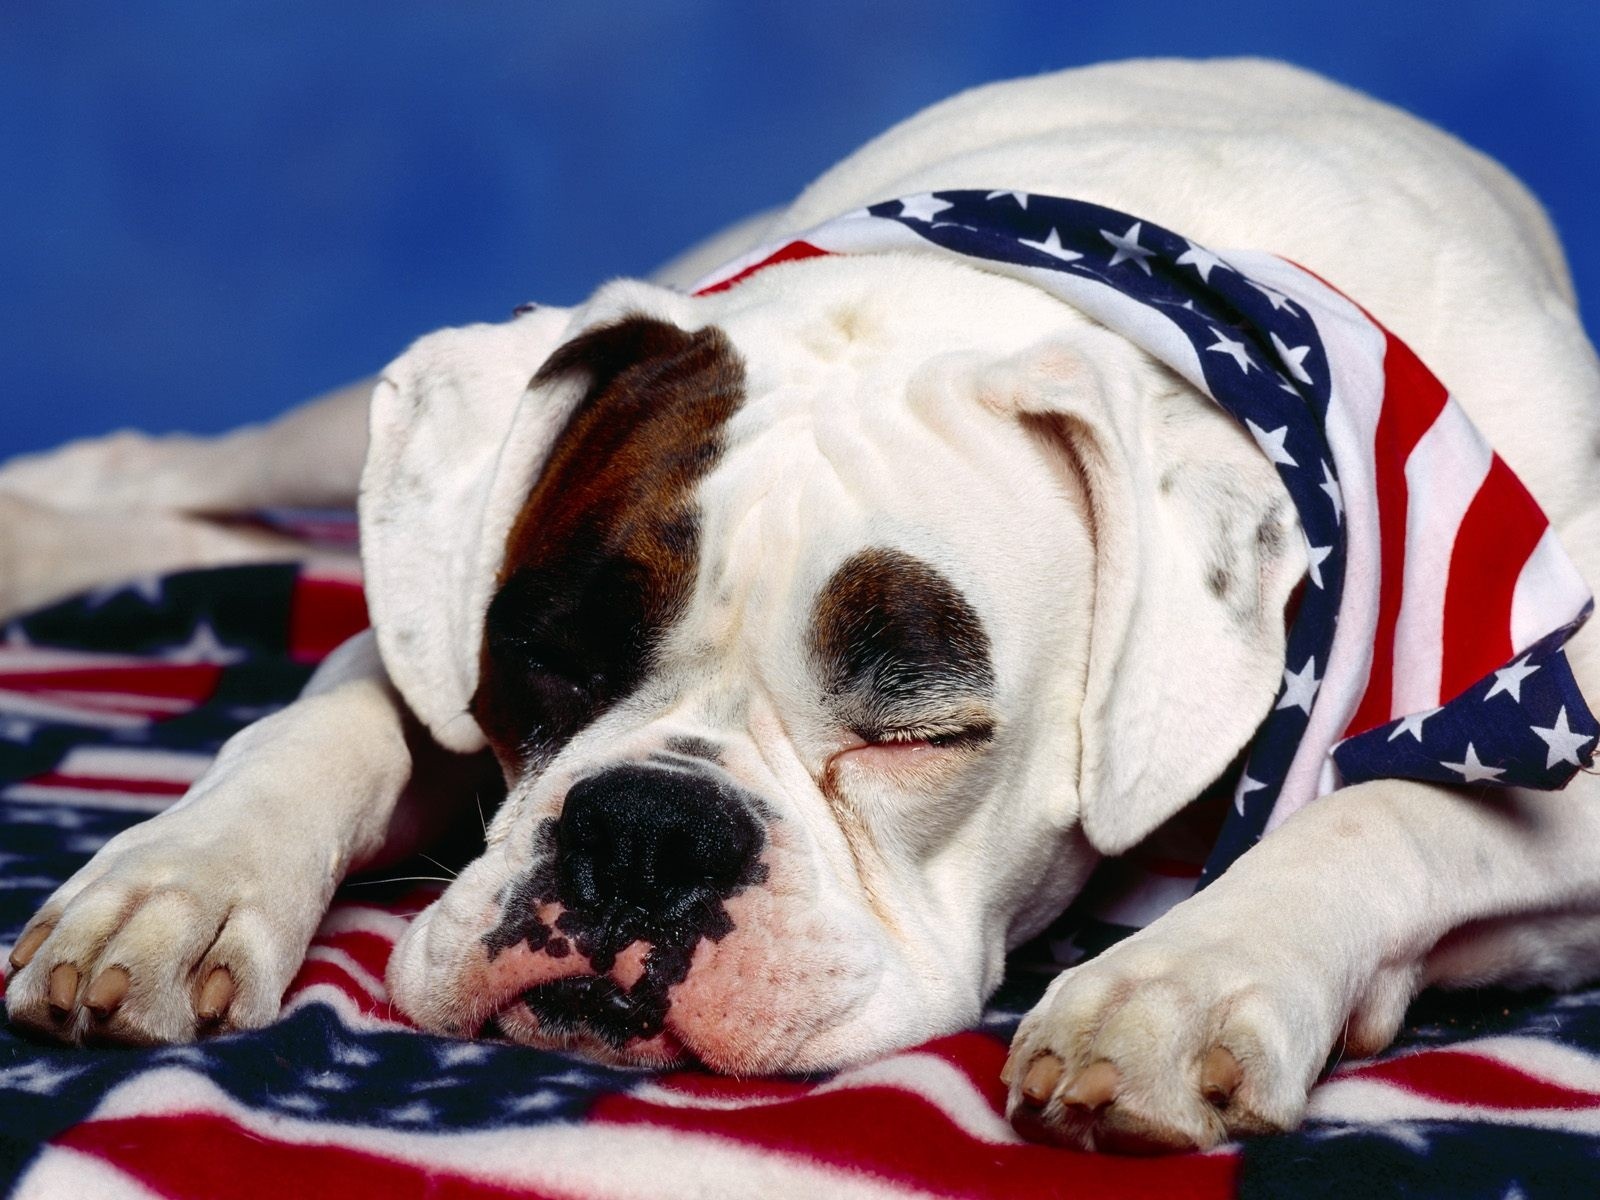 https://blogger.googleusercontent.com/img/b/R29vZ2xl/AVvXsEjbj6Rs9mRM-eCkkpUL4Ecp4Alwu0yCcaDgYjiNykZccqFi19cMcoaqQSVEWG7i9MX8SJi1A6I6FpaGNTR2ZEtVmrka9ilonARGm1vgrX5hUwwy6AKMRsAWNbIhxSEbdltthJSNhjuPB7s/s1600/American+flag+on+white+boxer+dog+wallpaper.jpg